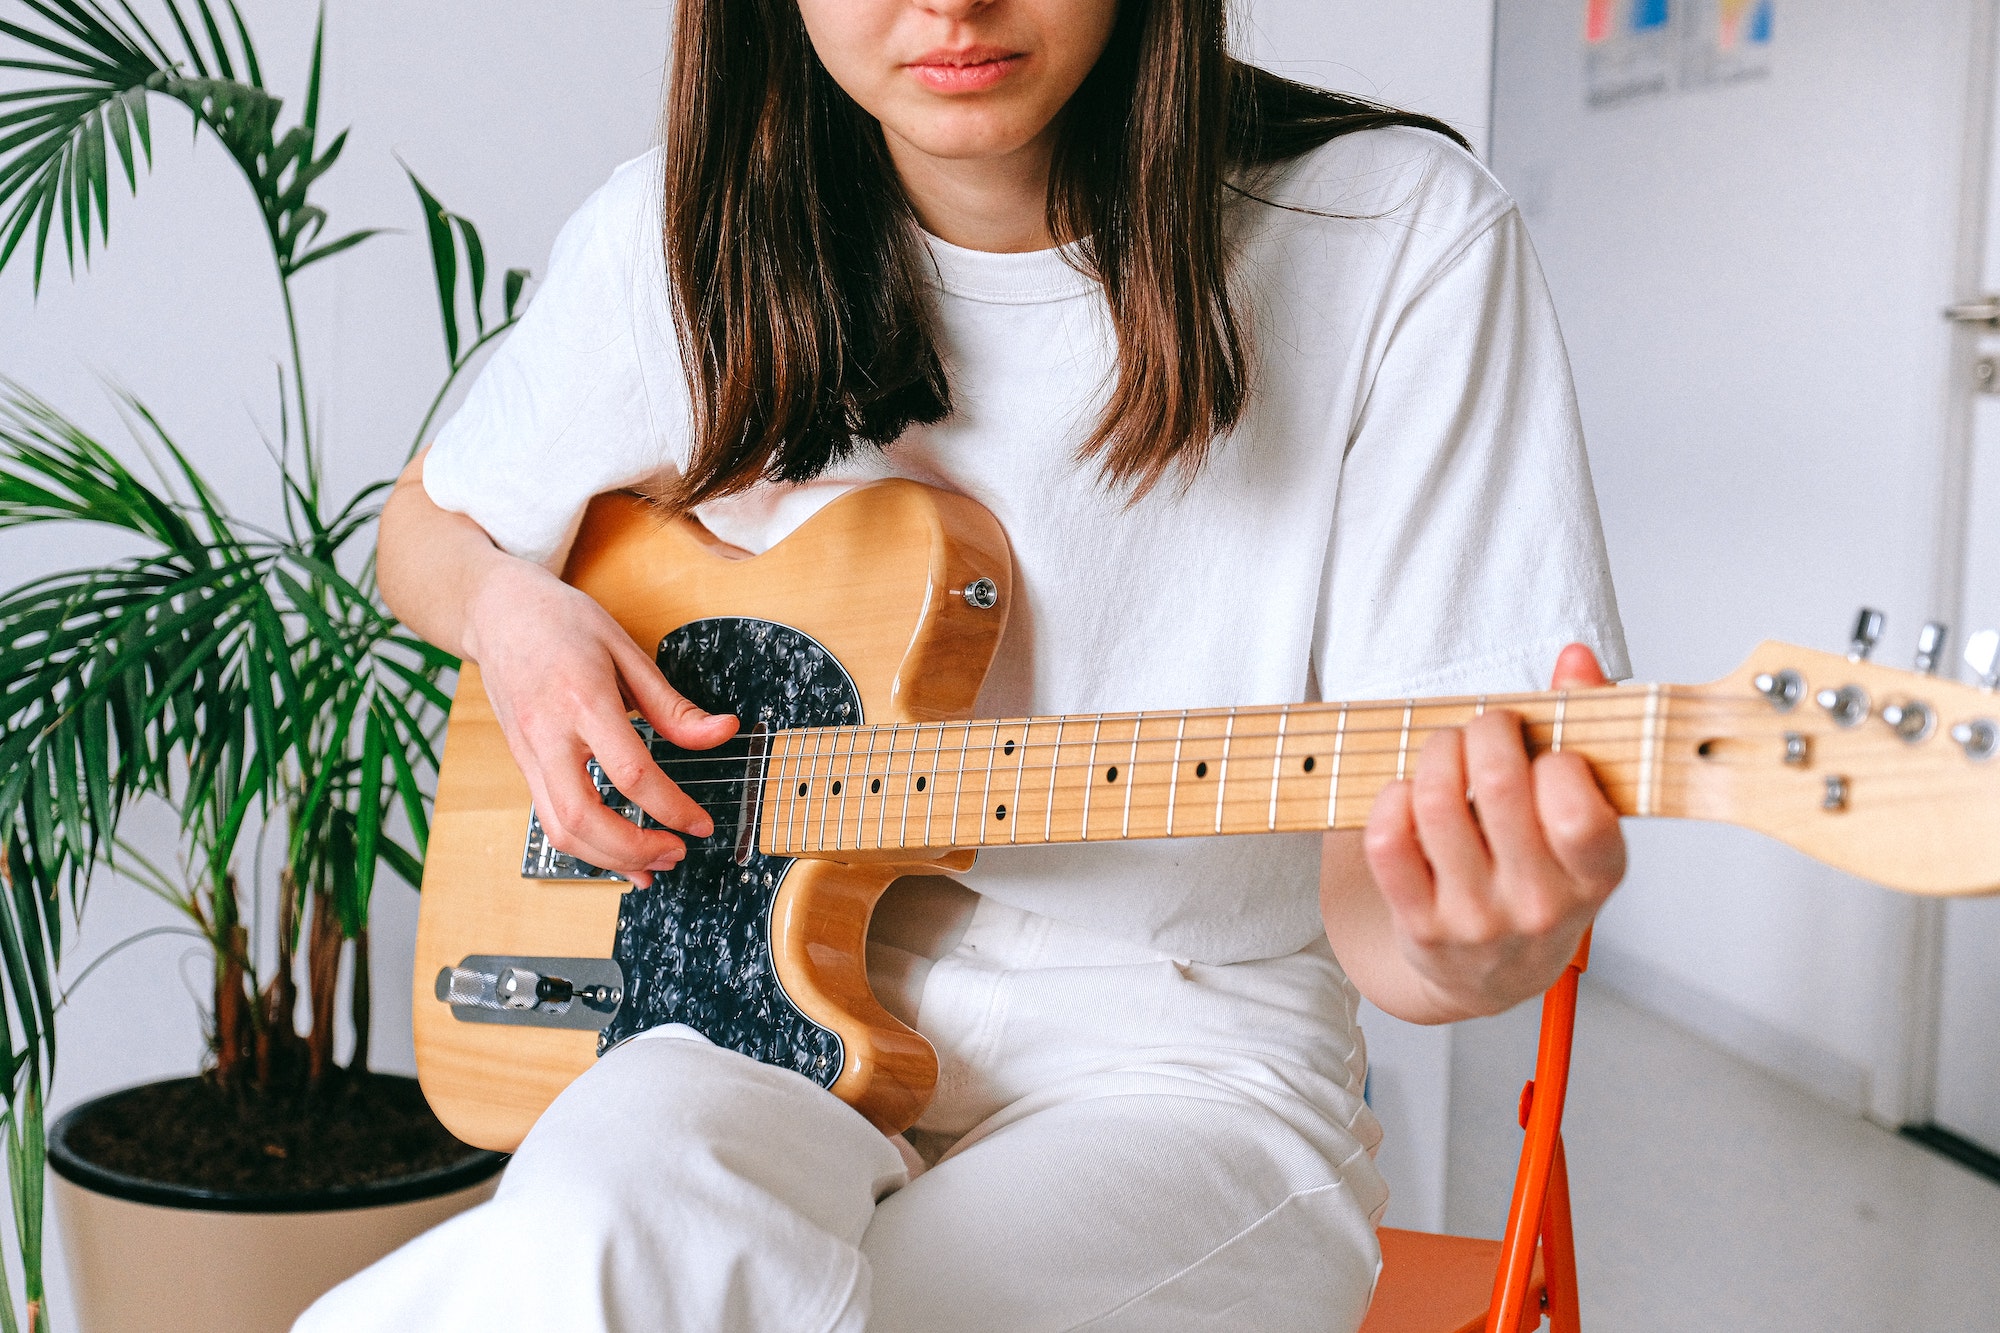 Woman practising guitar at home as hobby